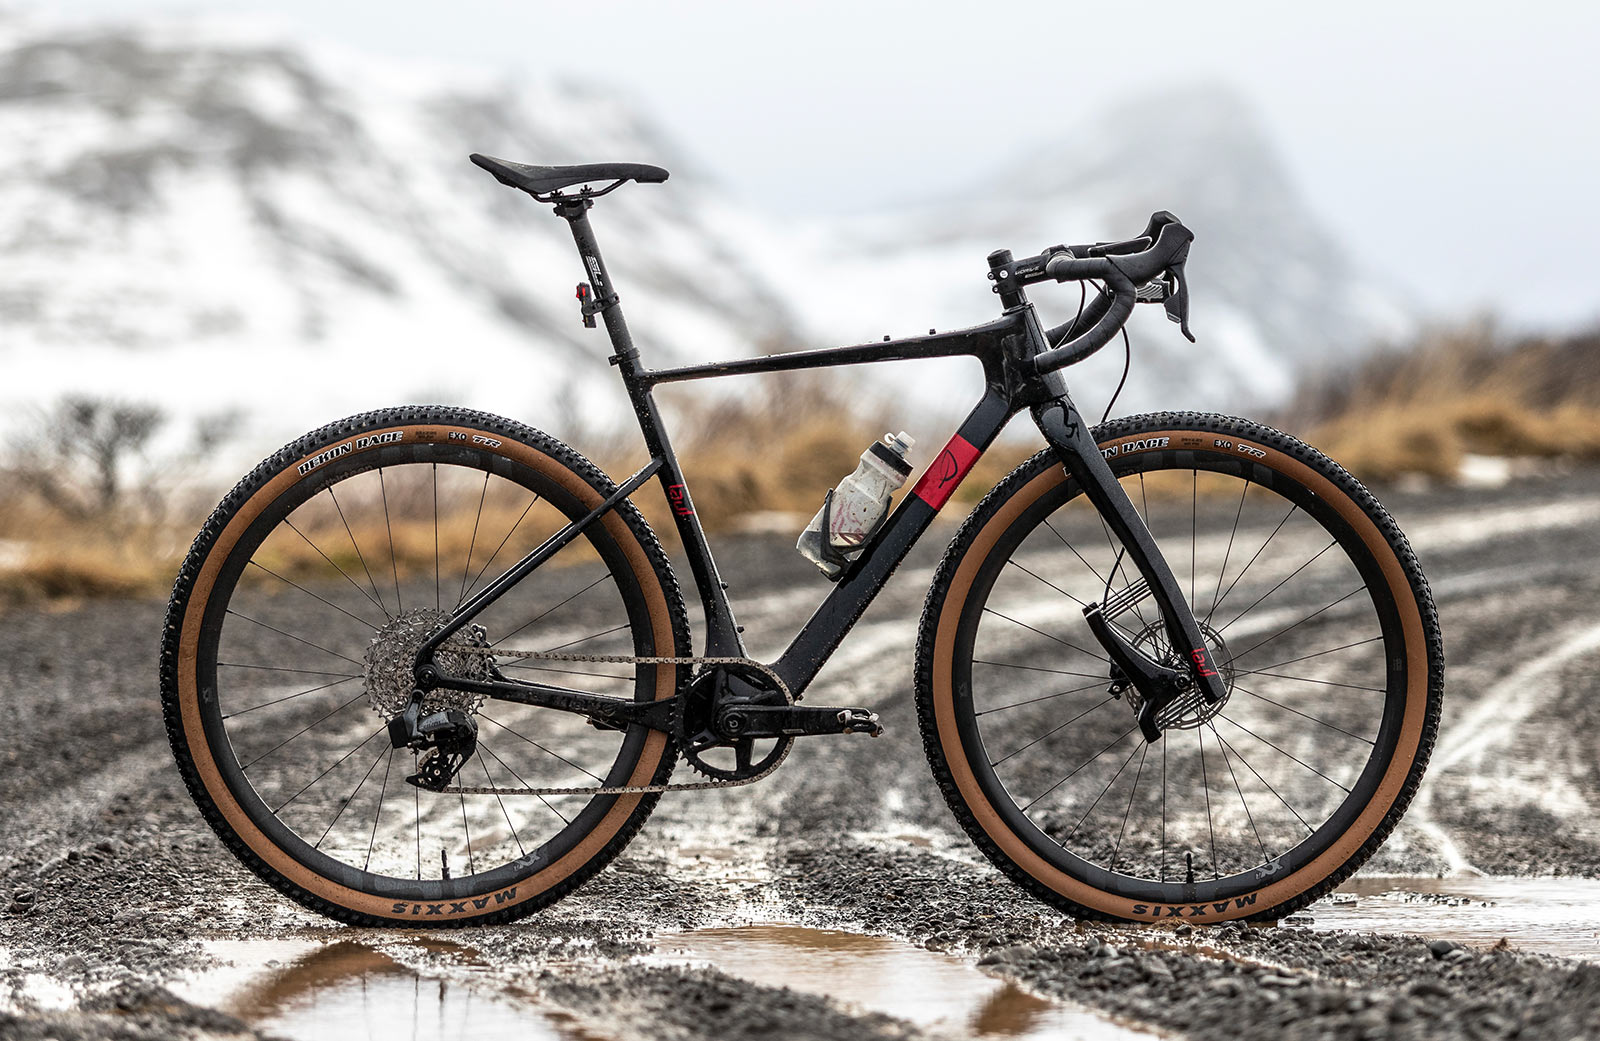 All-new Lauf Seigla gravel bike dramatically boosts compliance & tire size